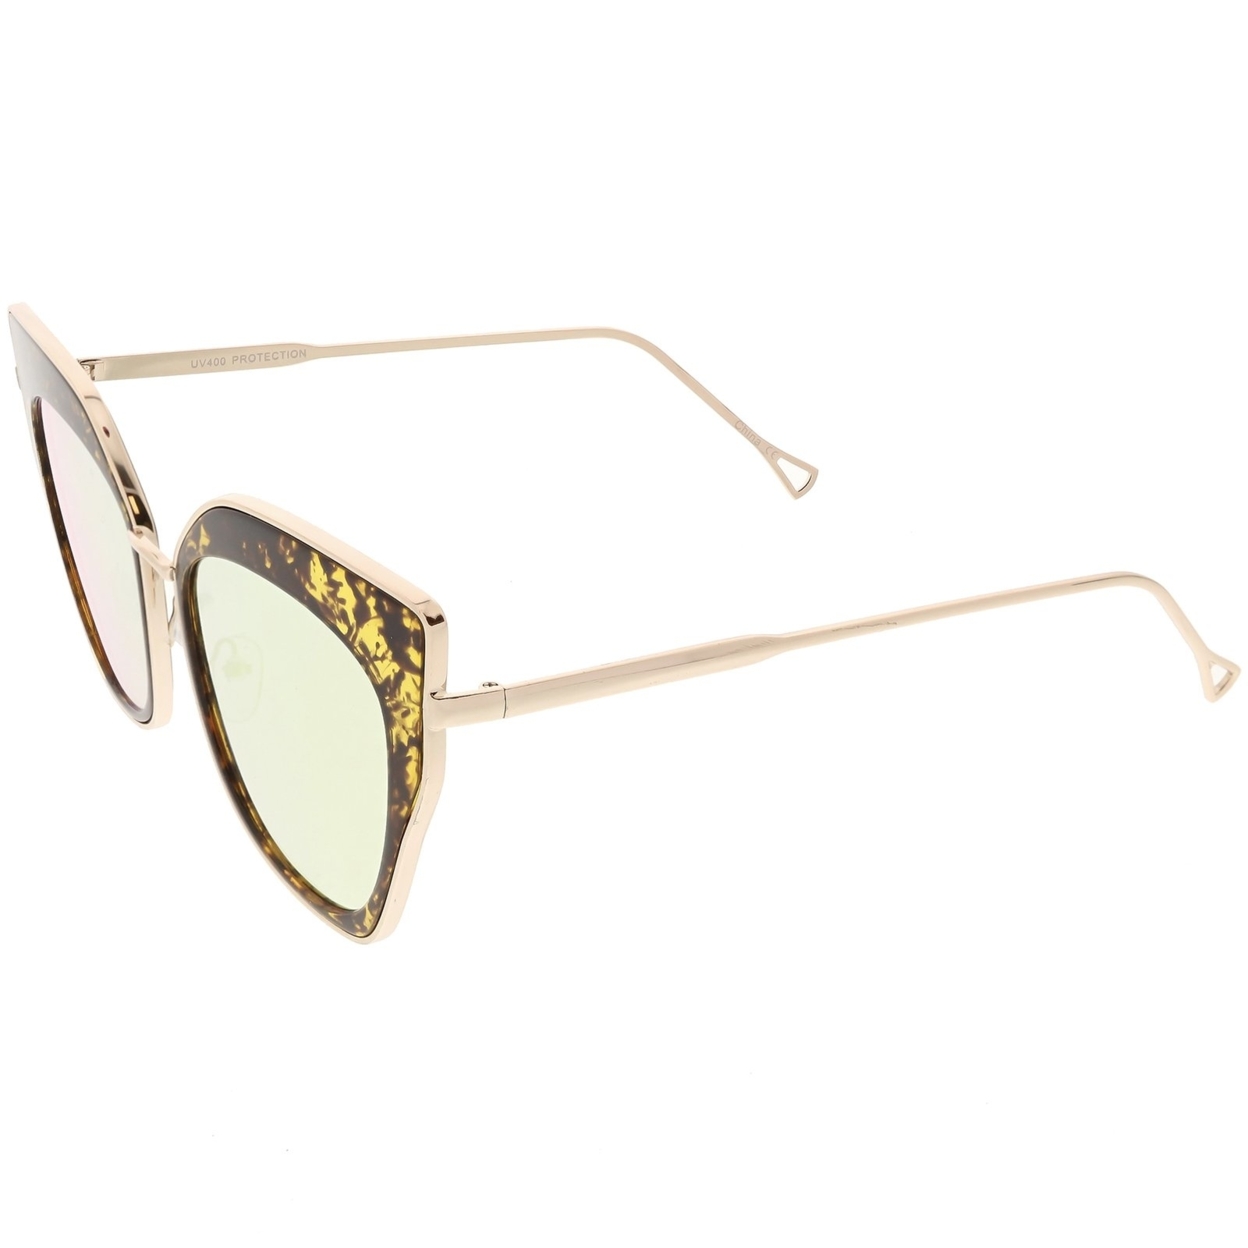 Oversize Pointed Cat Eye Sunglasses Slim Metal Nose Bridge Square Colored Mirror Lens 58mm - Black Black / Purple Mirror